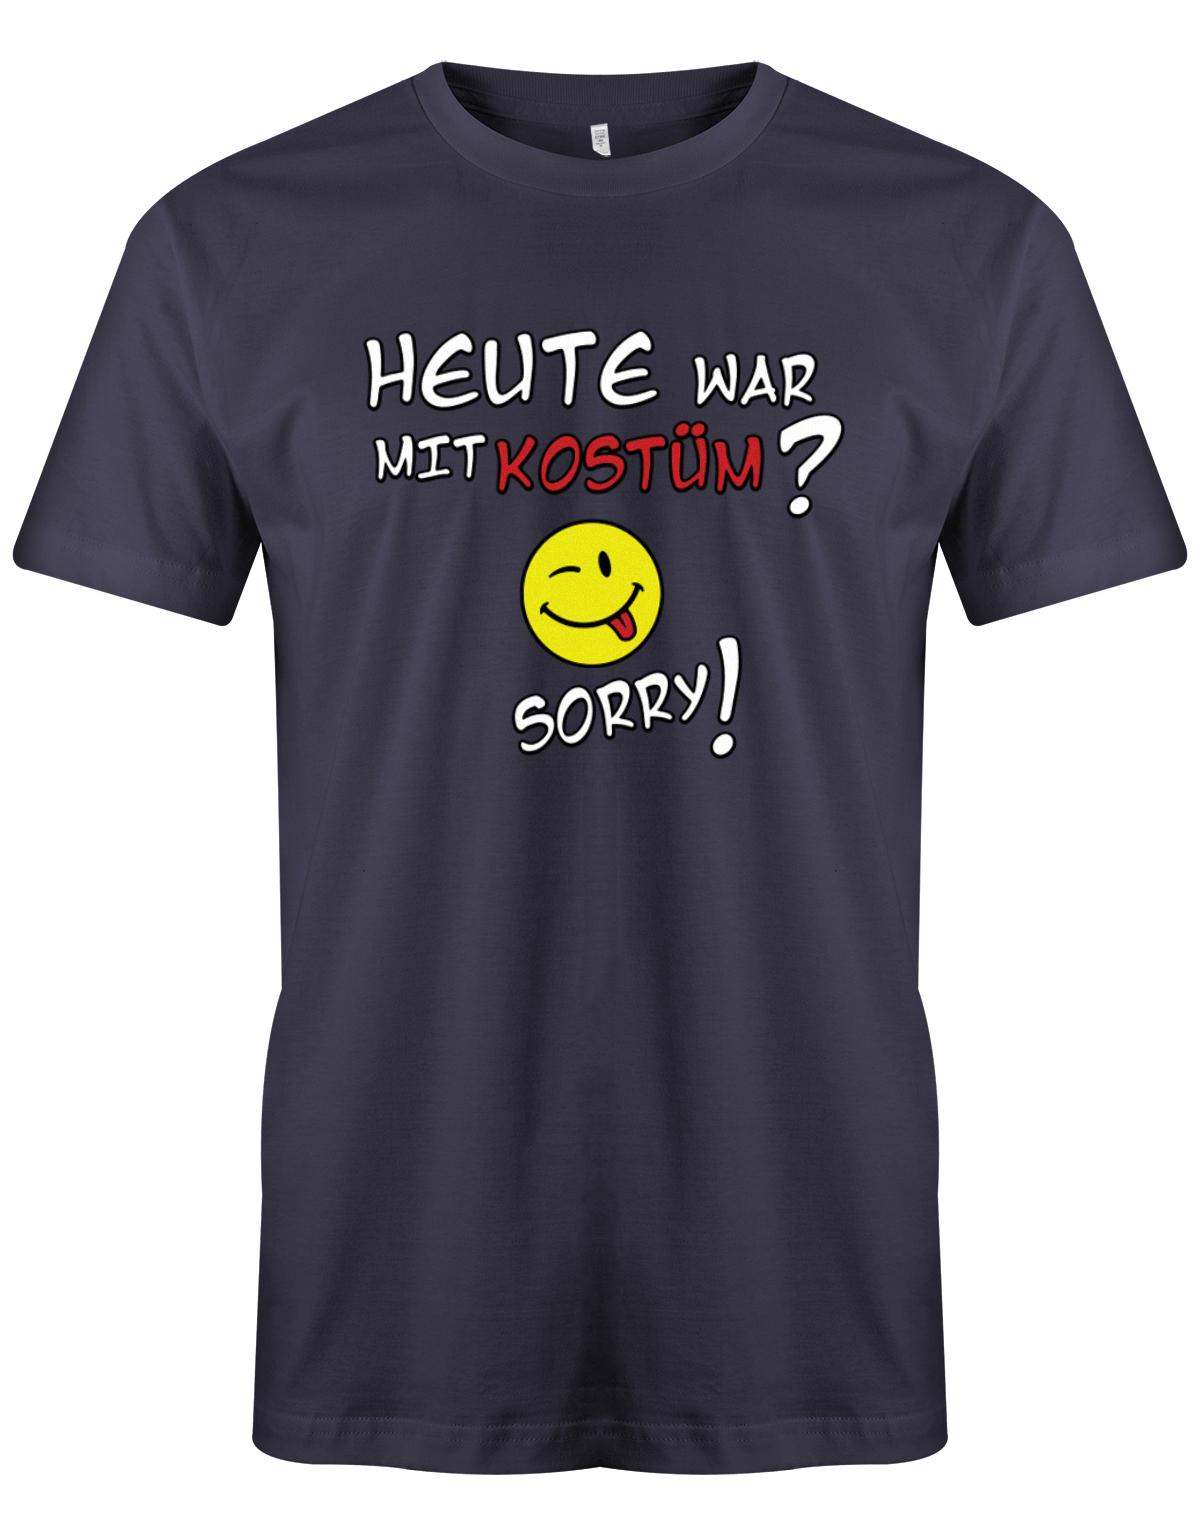 Heute-war-mit-kost-m-Sorry-Herren-Shirt-Navy